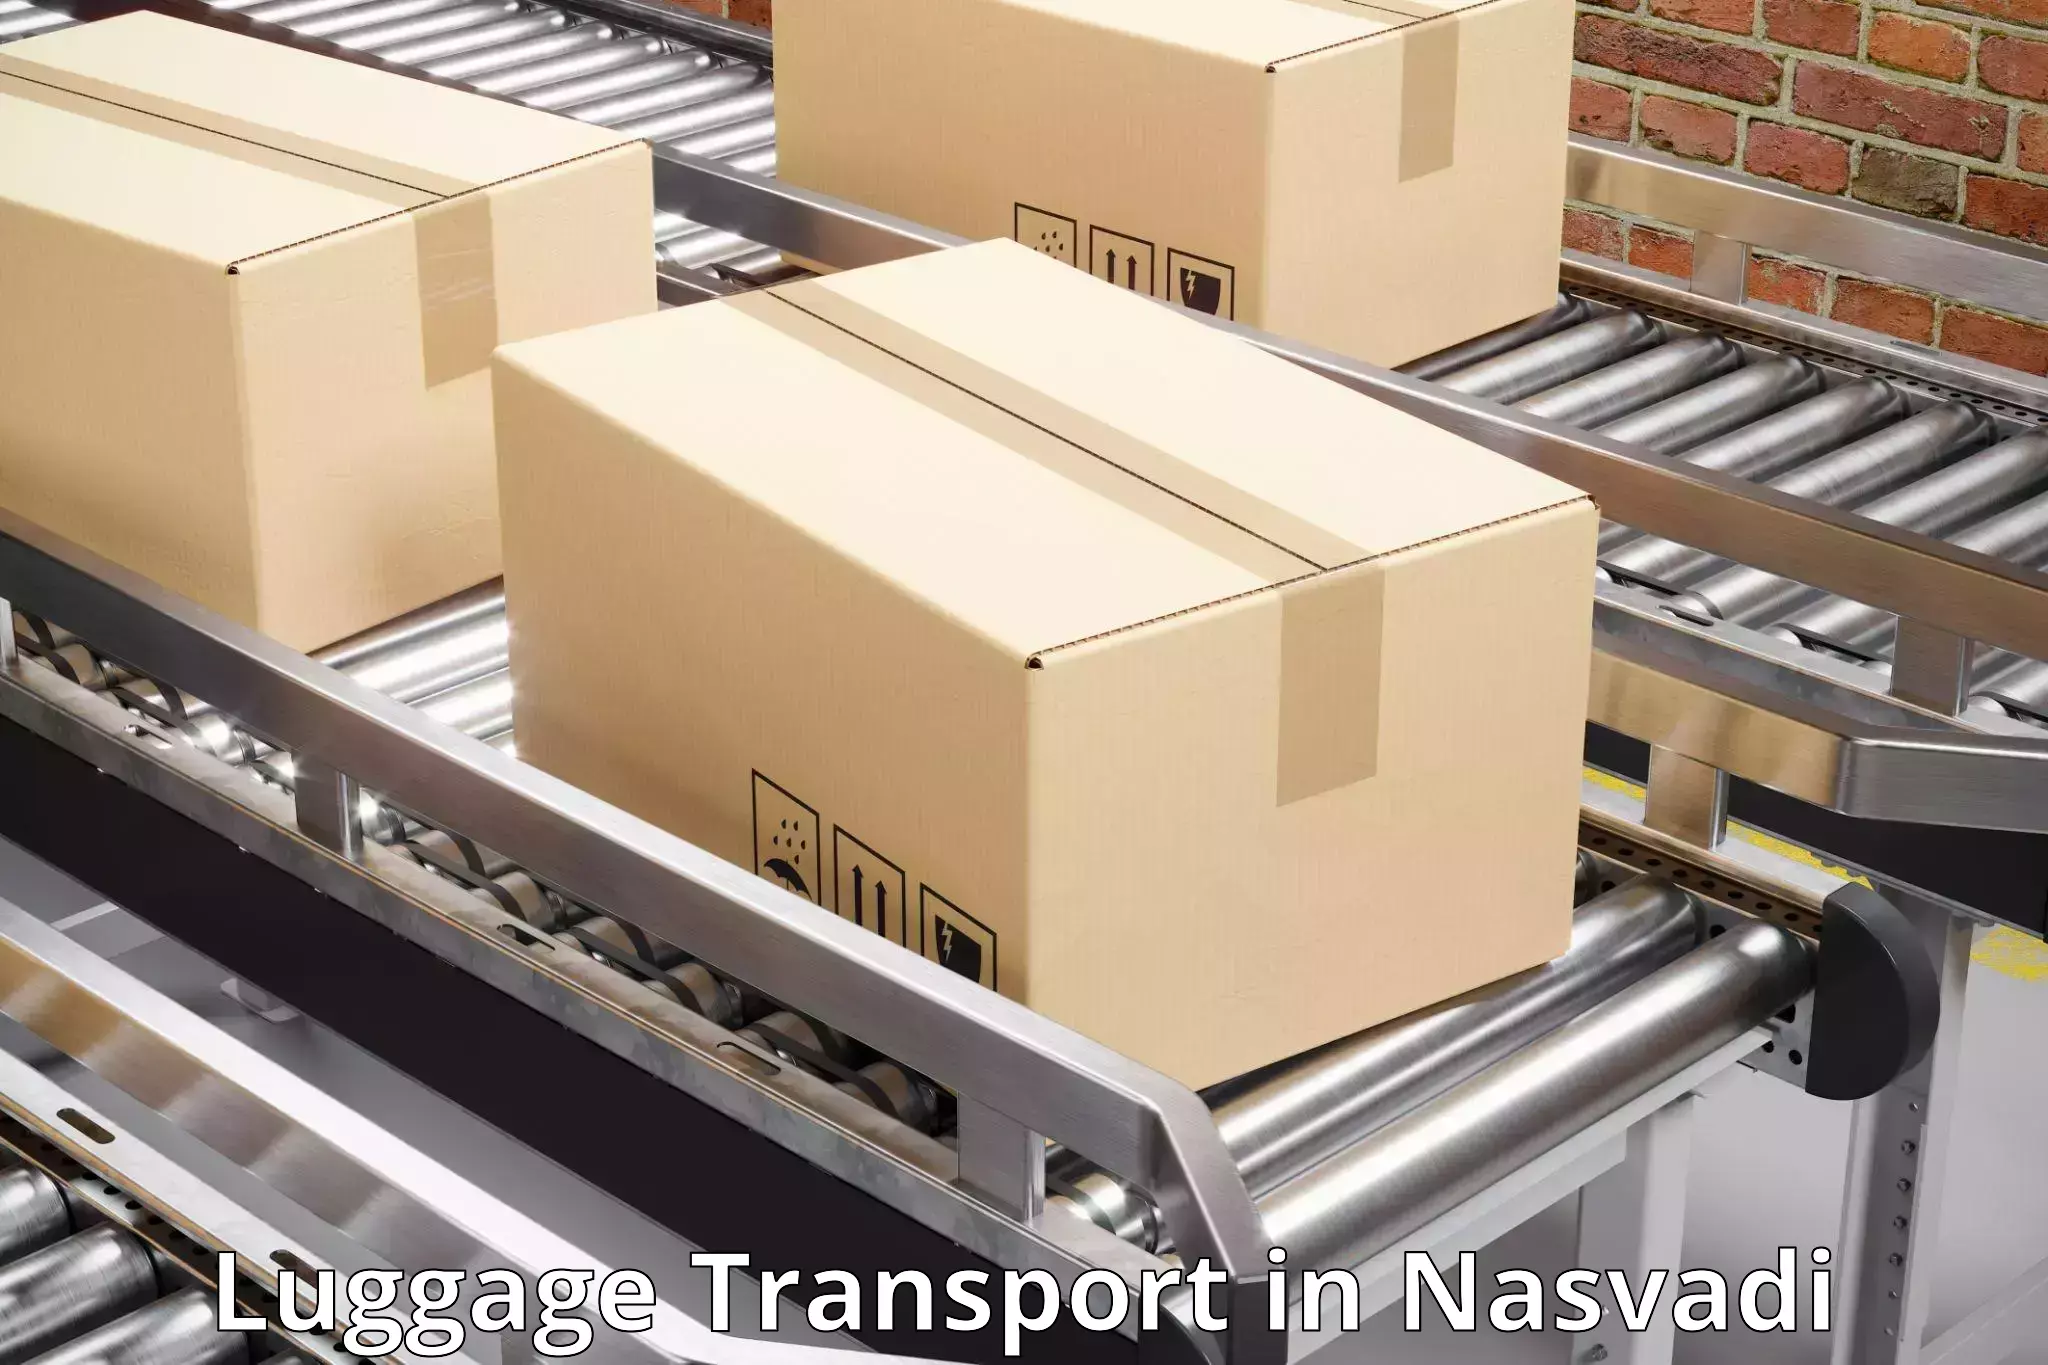 Luggage transit service in Nasvadi